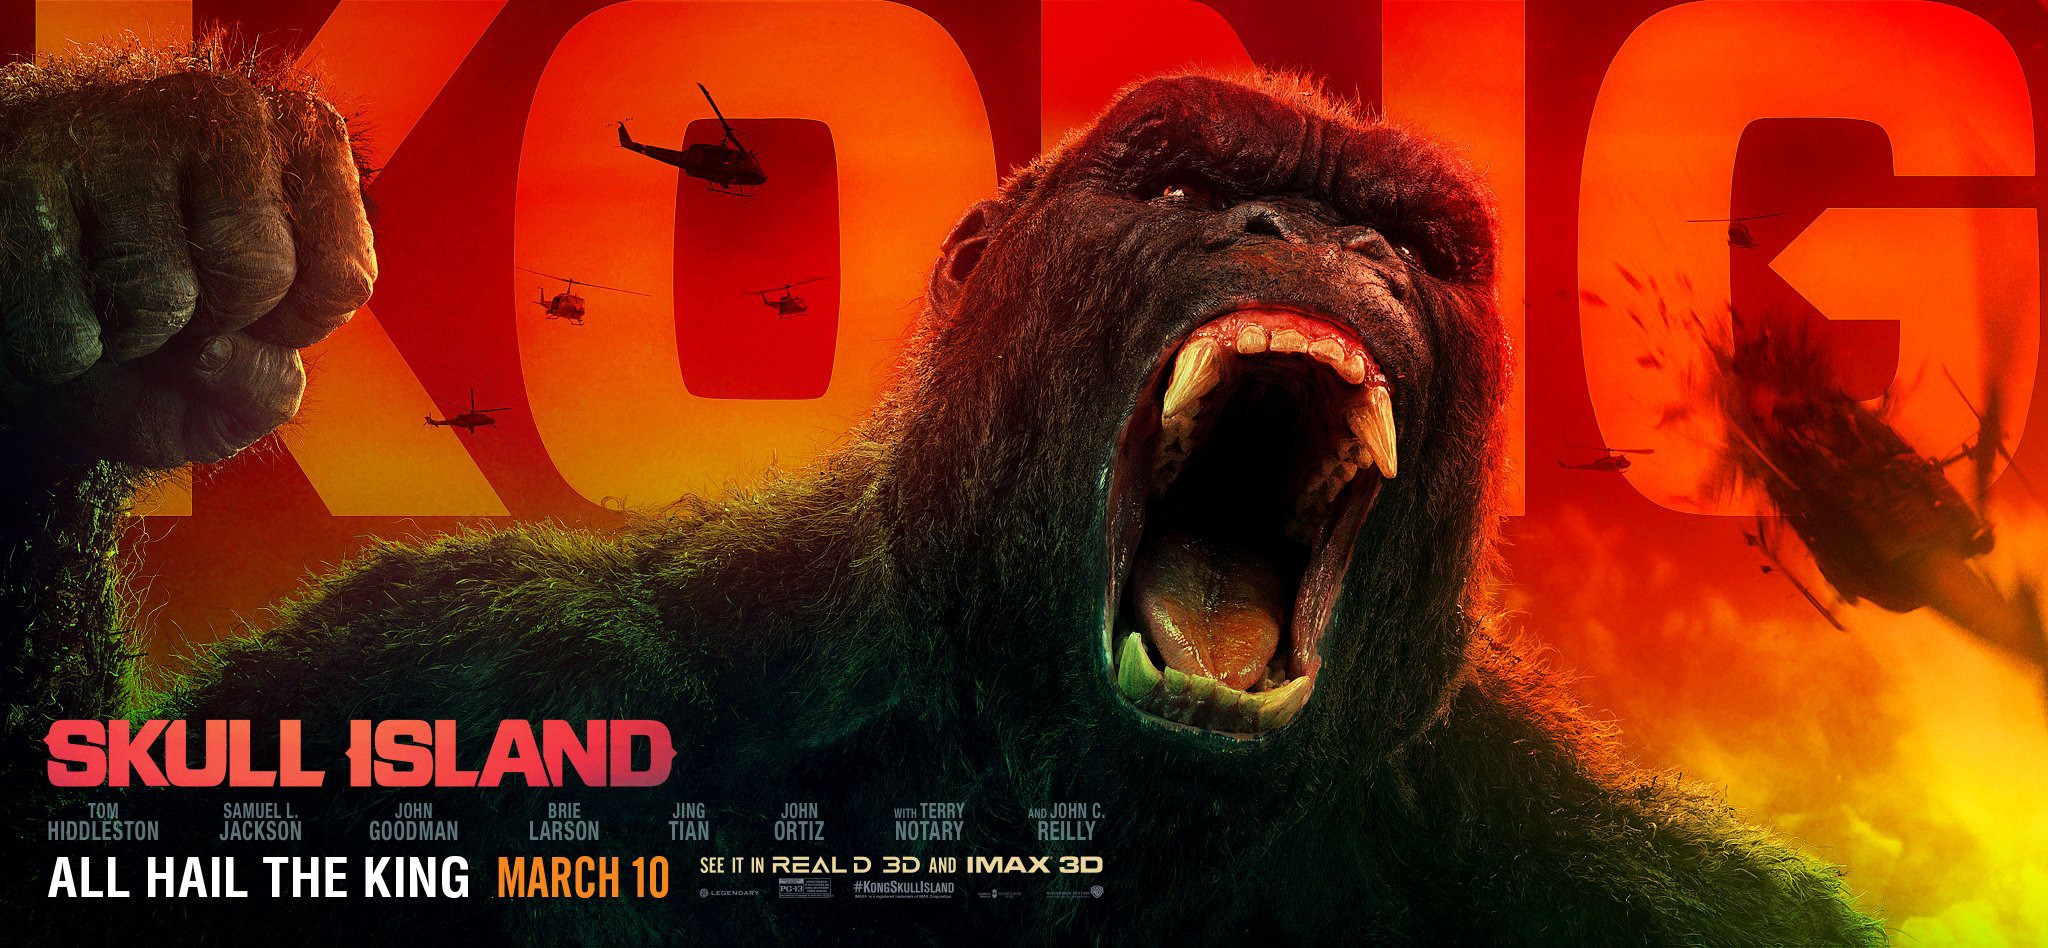 Mega Sized Movie Poster Image for Kong: Skull Island (#6 of 22)